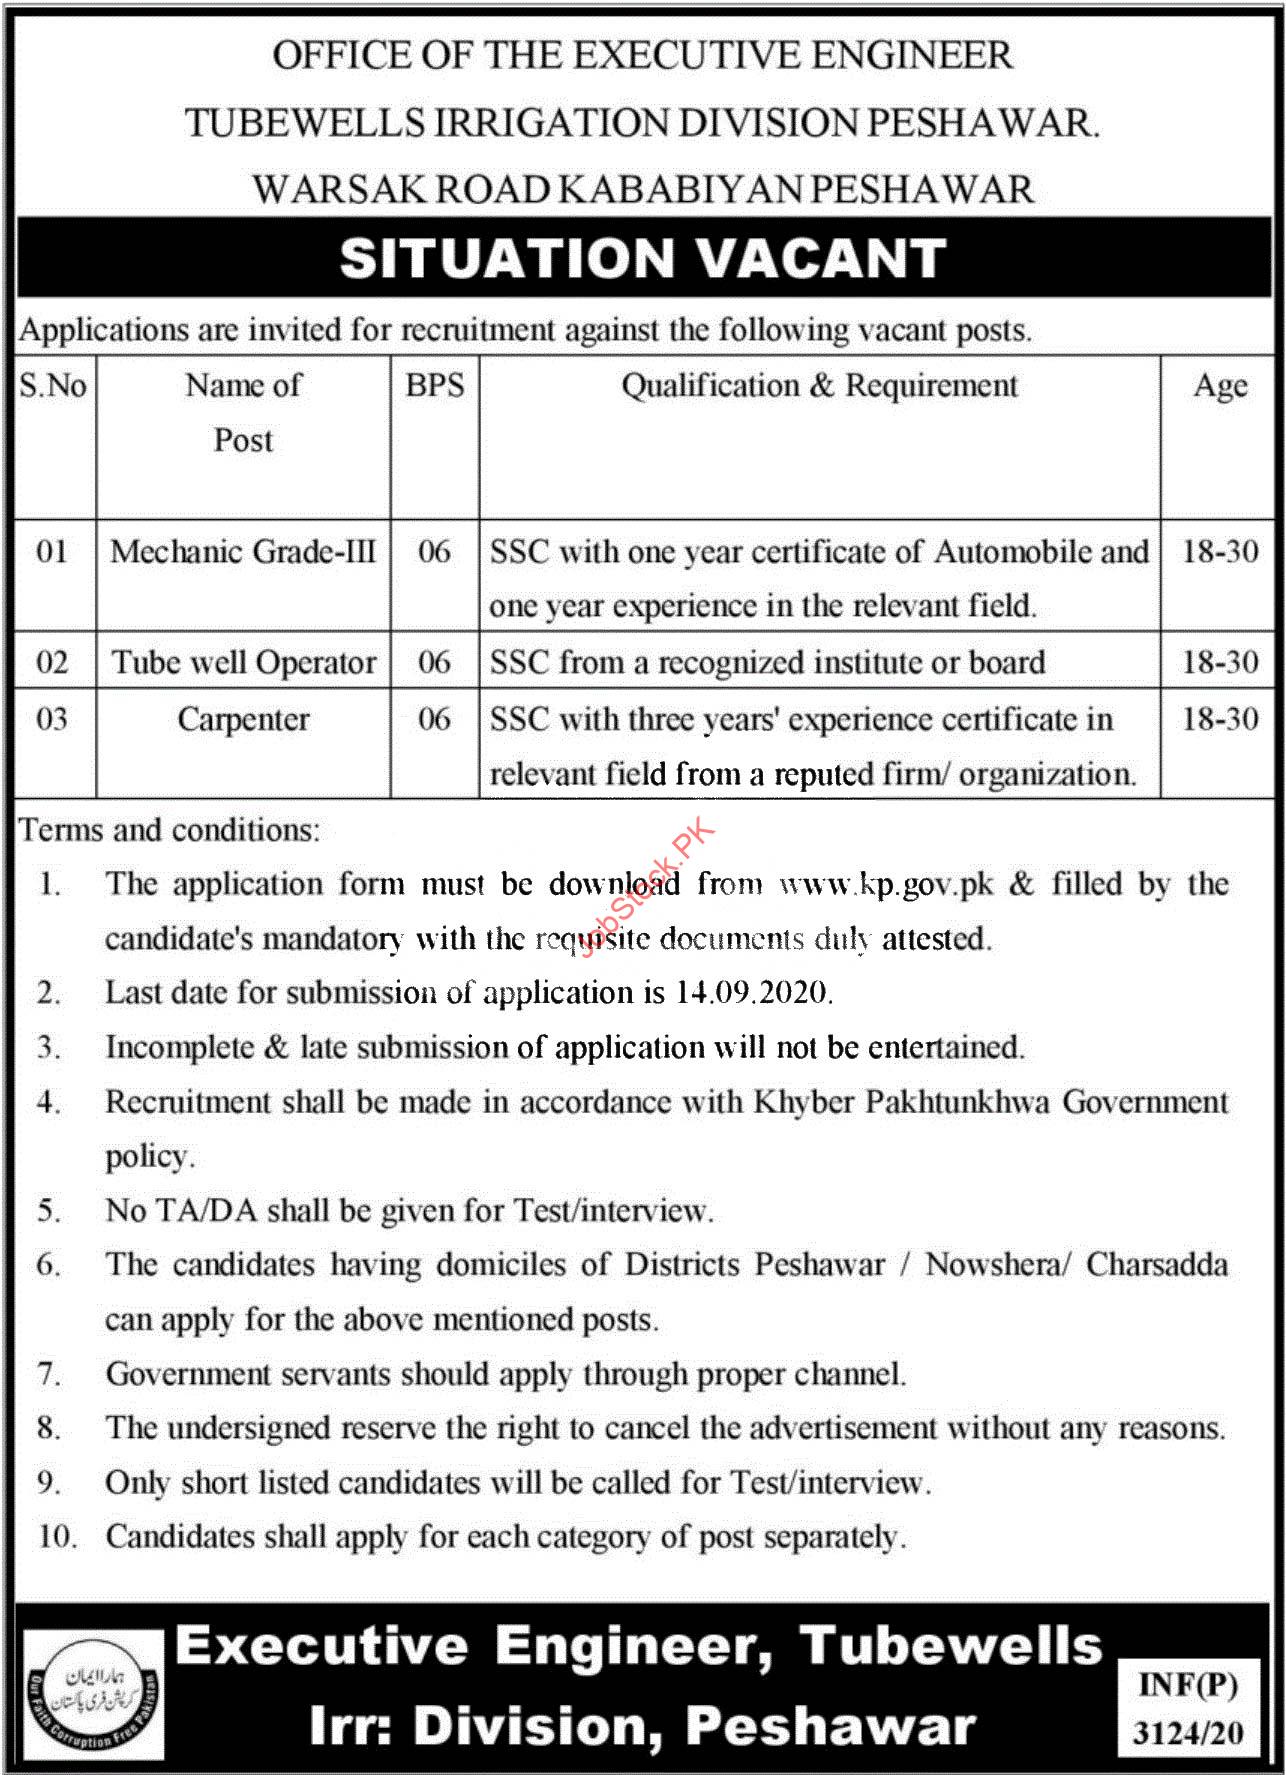 Tubewells Irrigation Division Peshawar Jobs 2020